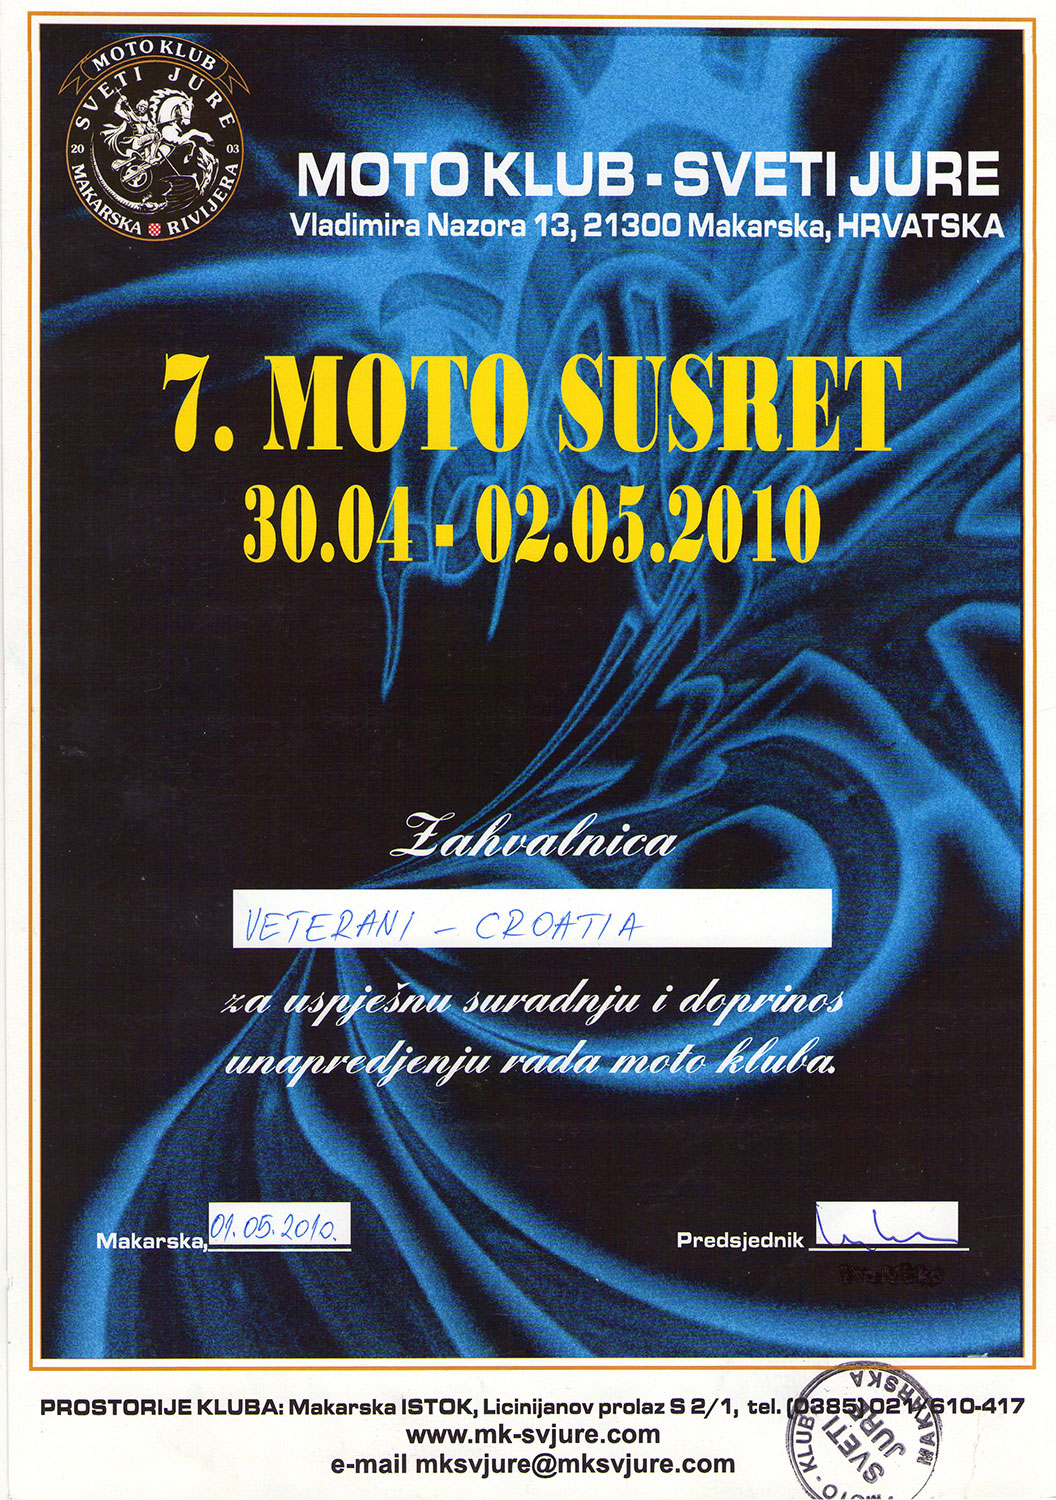 2010 04 30 mk sveti jure makarska